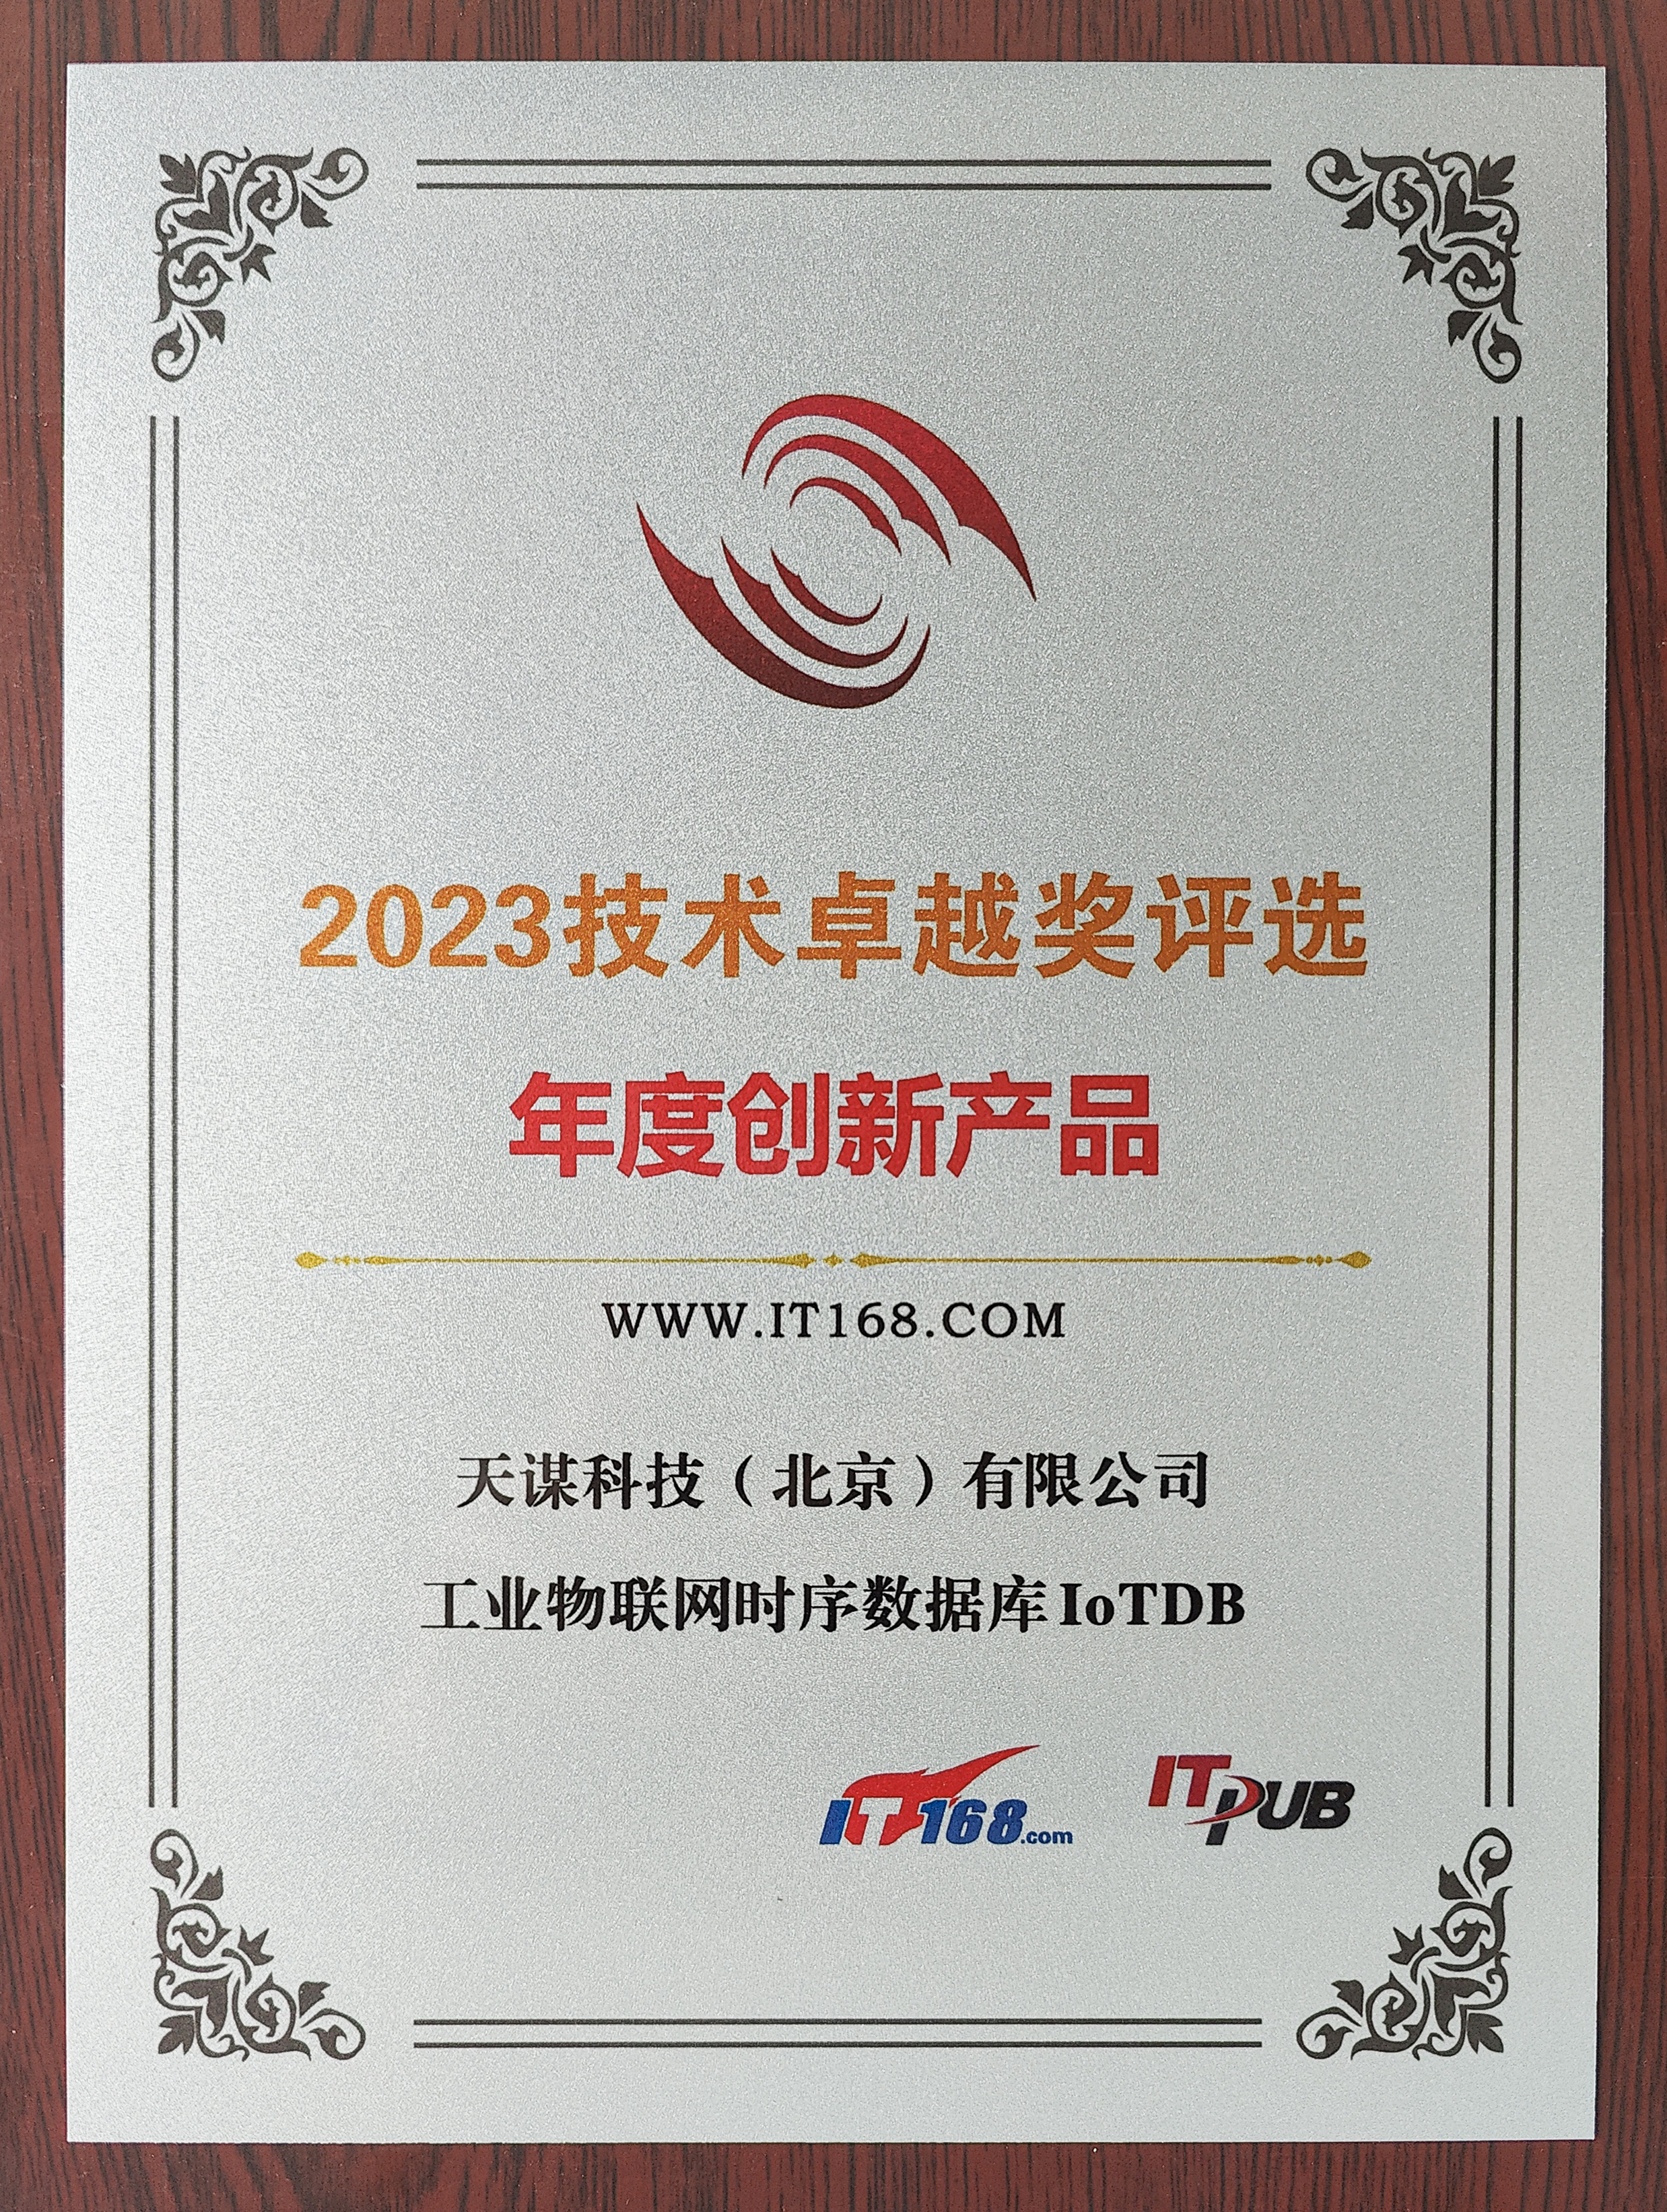 IoTDB IT168 2023 技术卓越奖评选年度创新产品.jpg